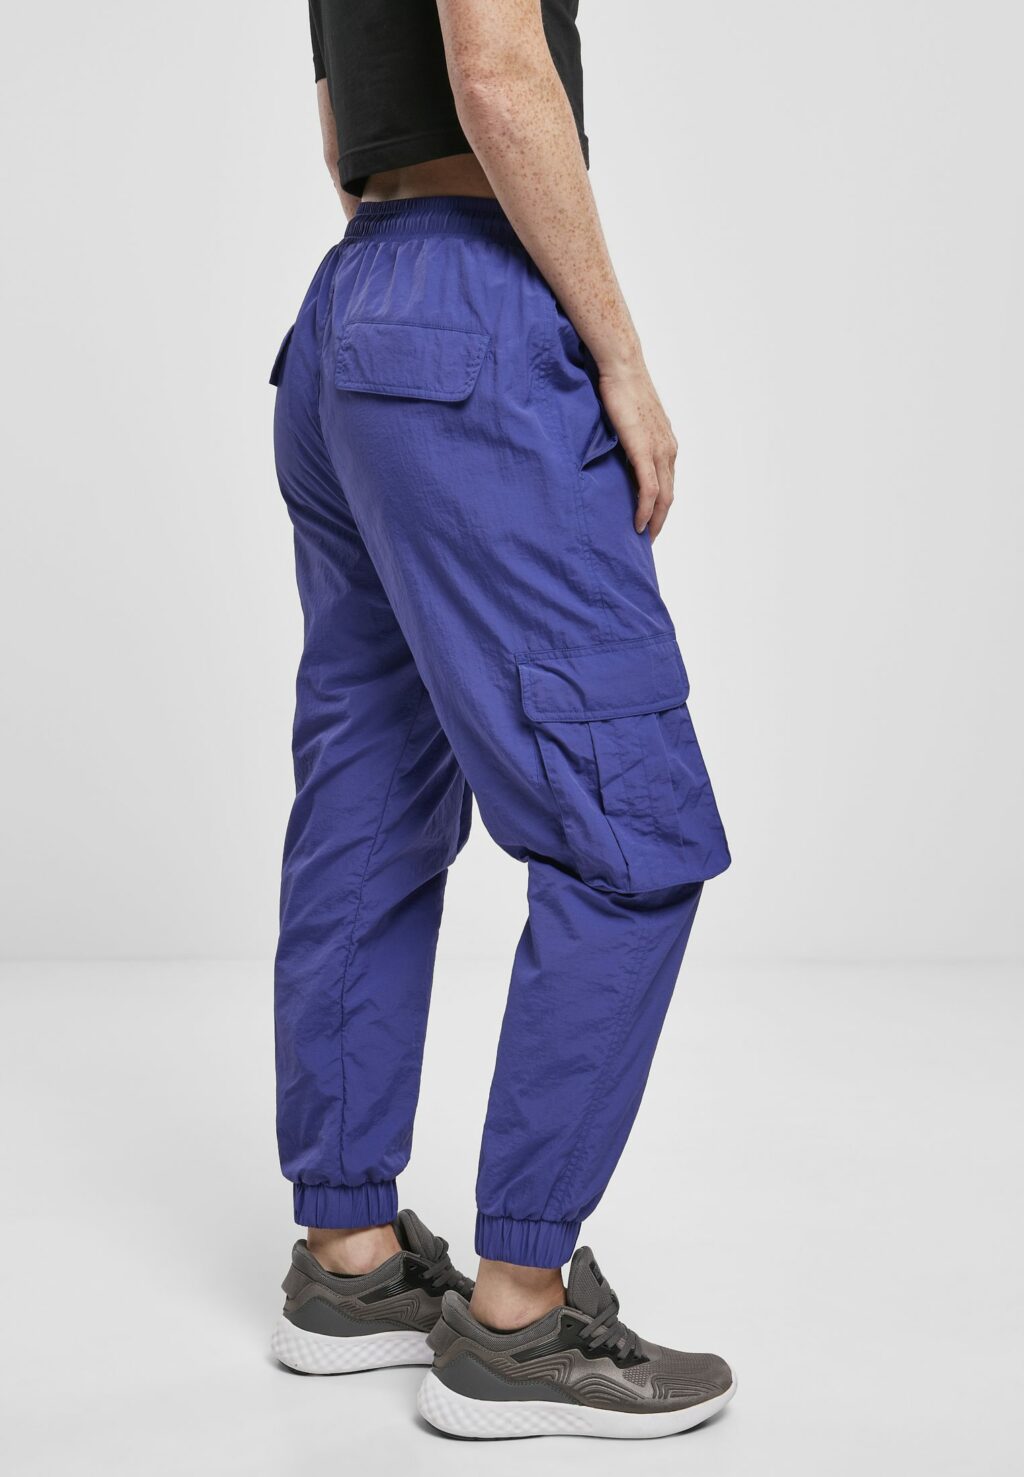 Urban Classics Ladies High Waist Crinkle Nylon Cargo Pants bluepurple TB3636